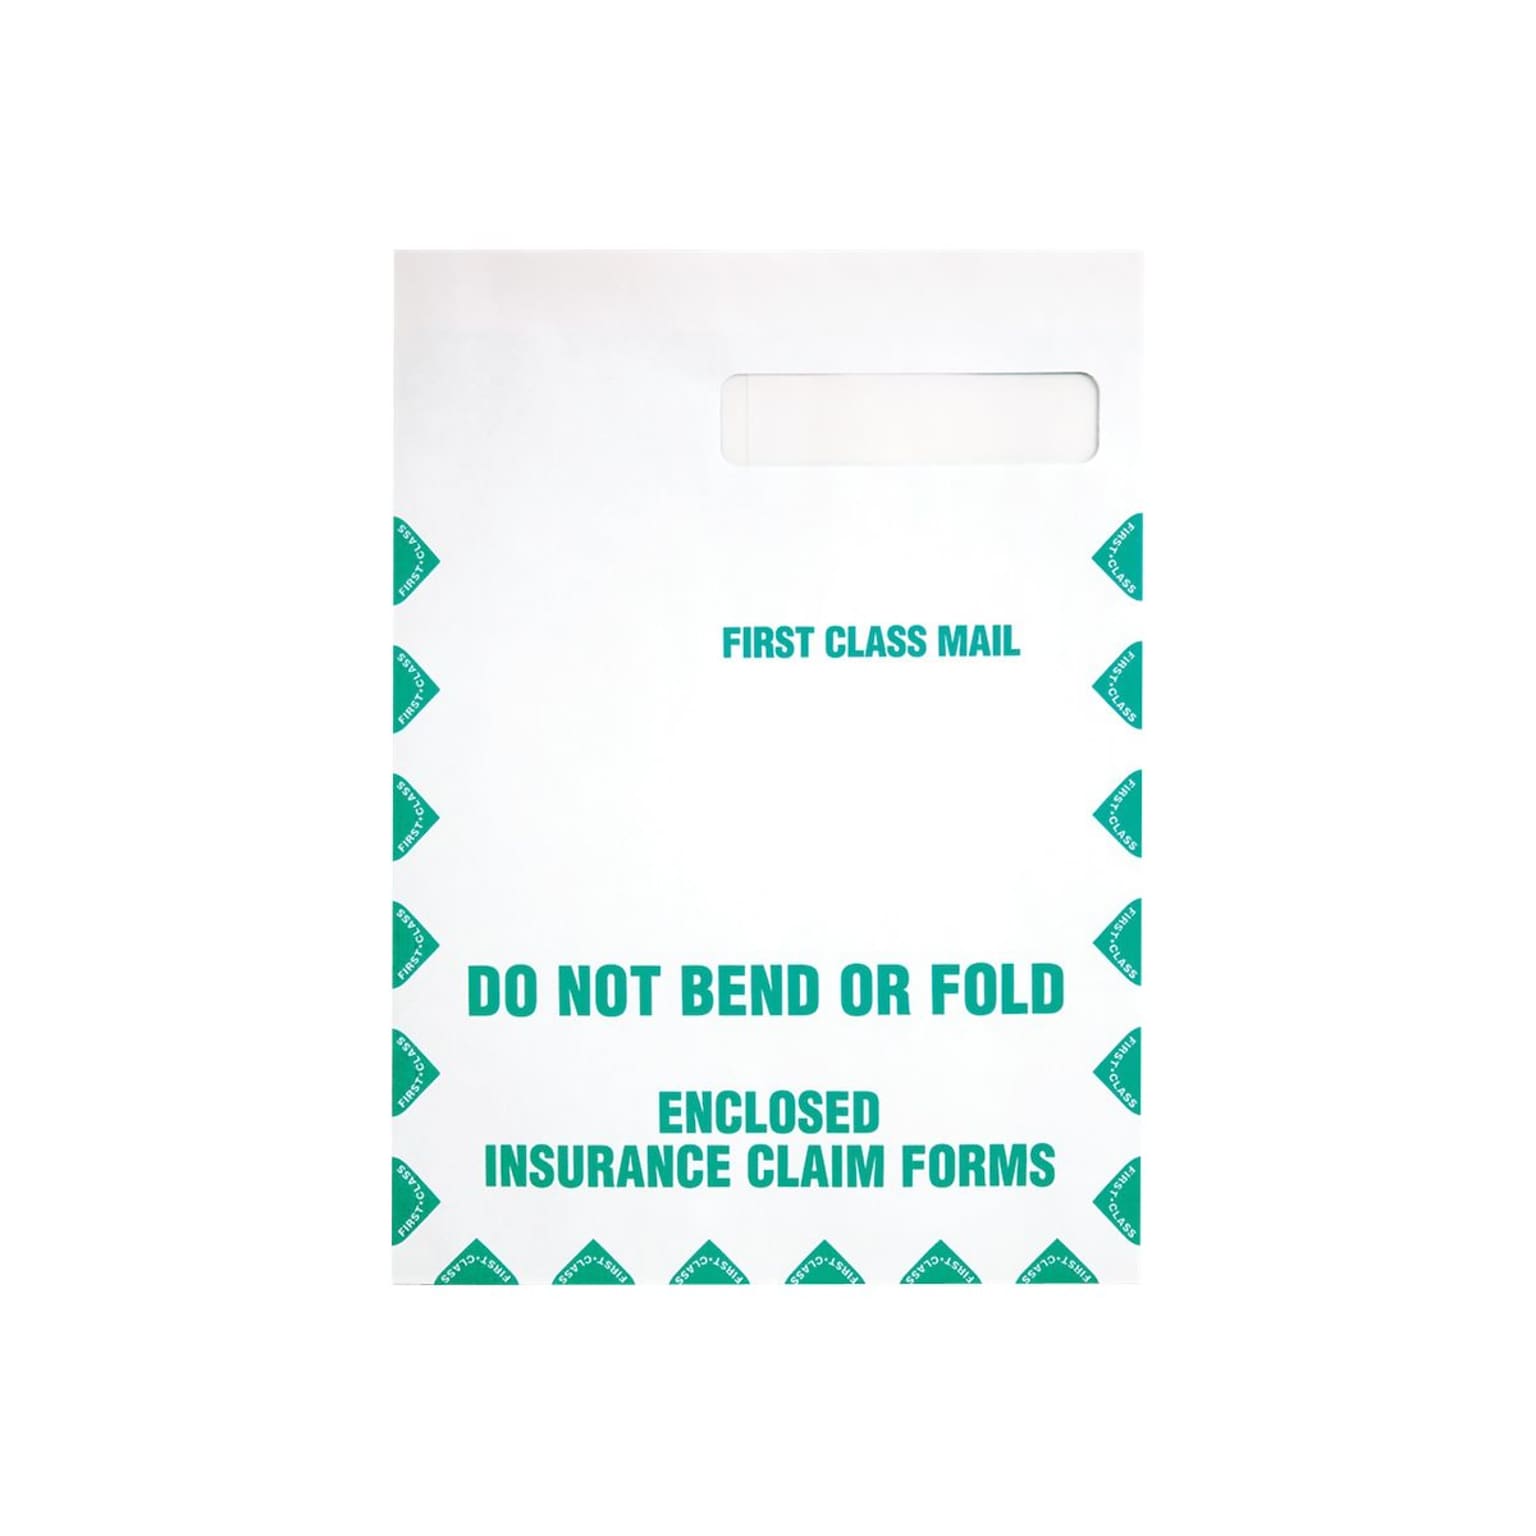 Quality Park Health Claim Insurance Self Seal Catalog Envelopes, 9 x 12.5, White Wove, 100/Box (QUA54692)